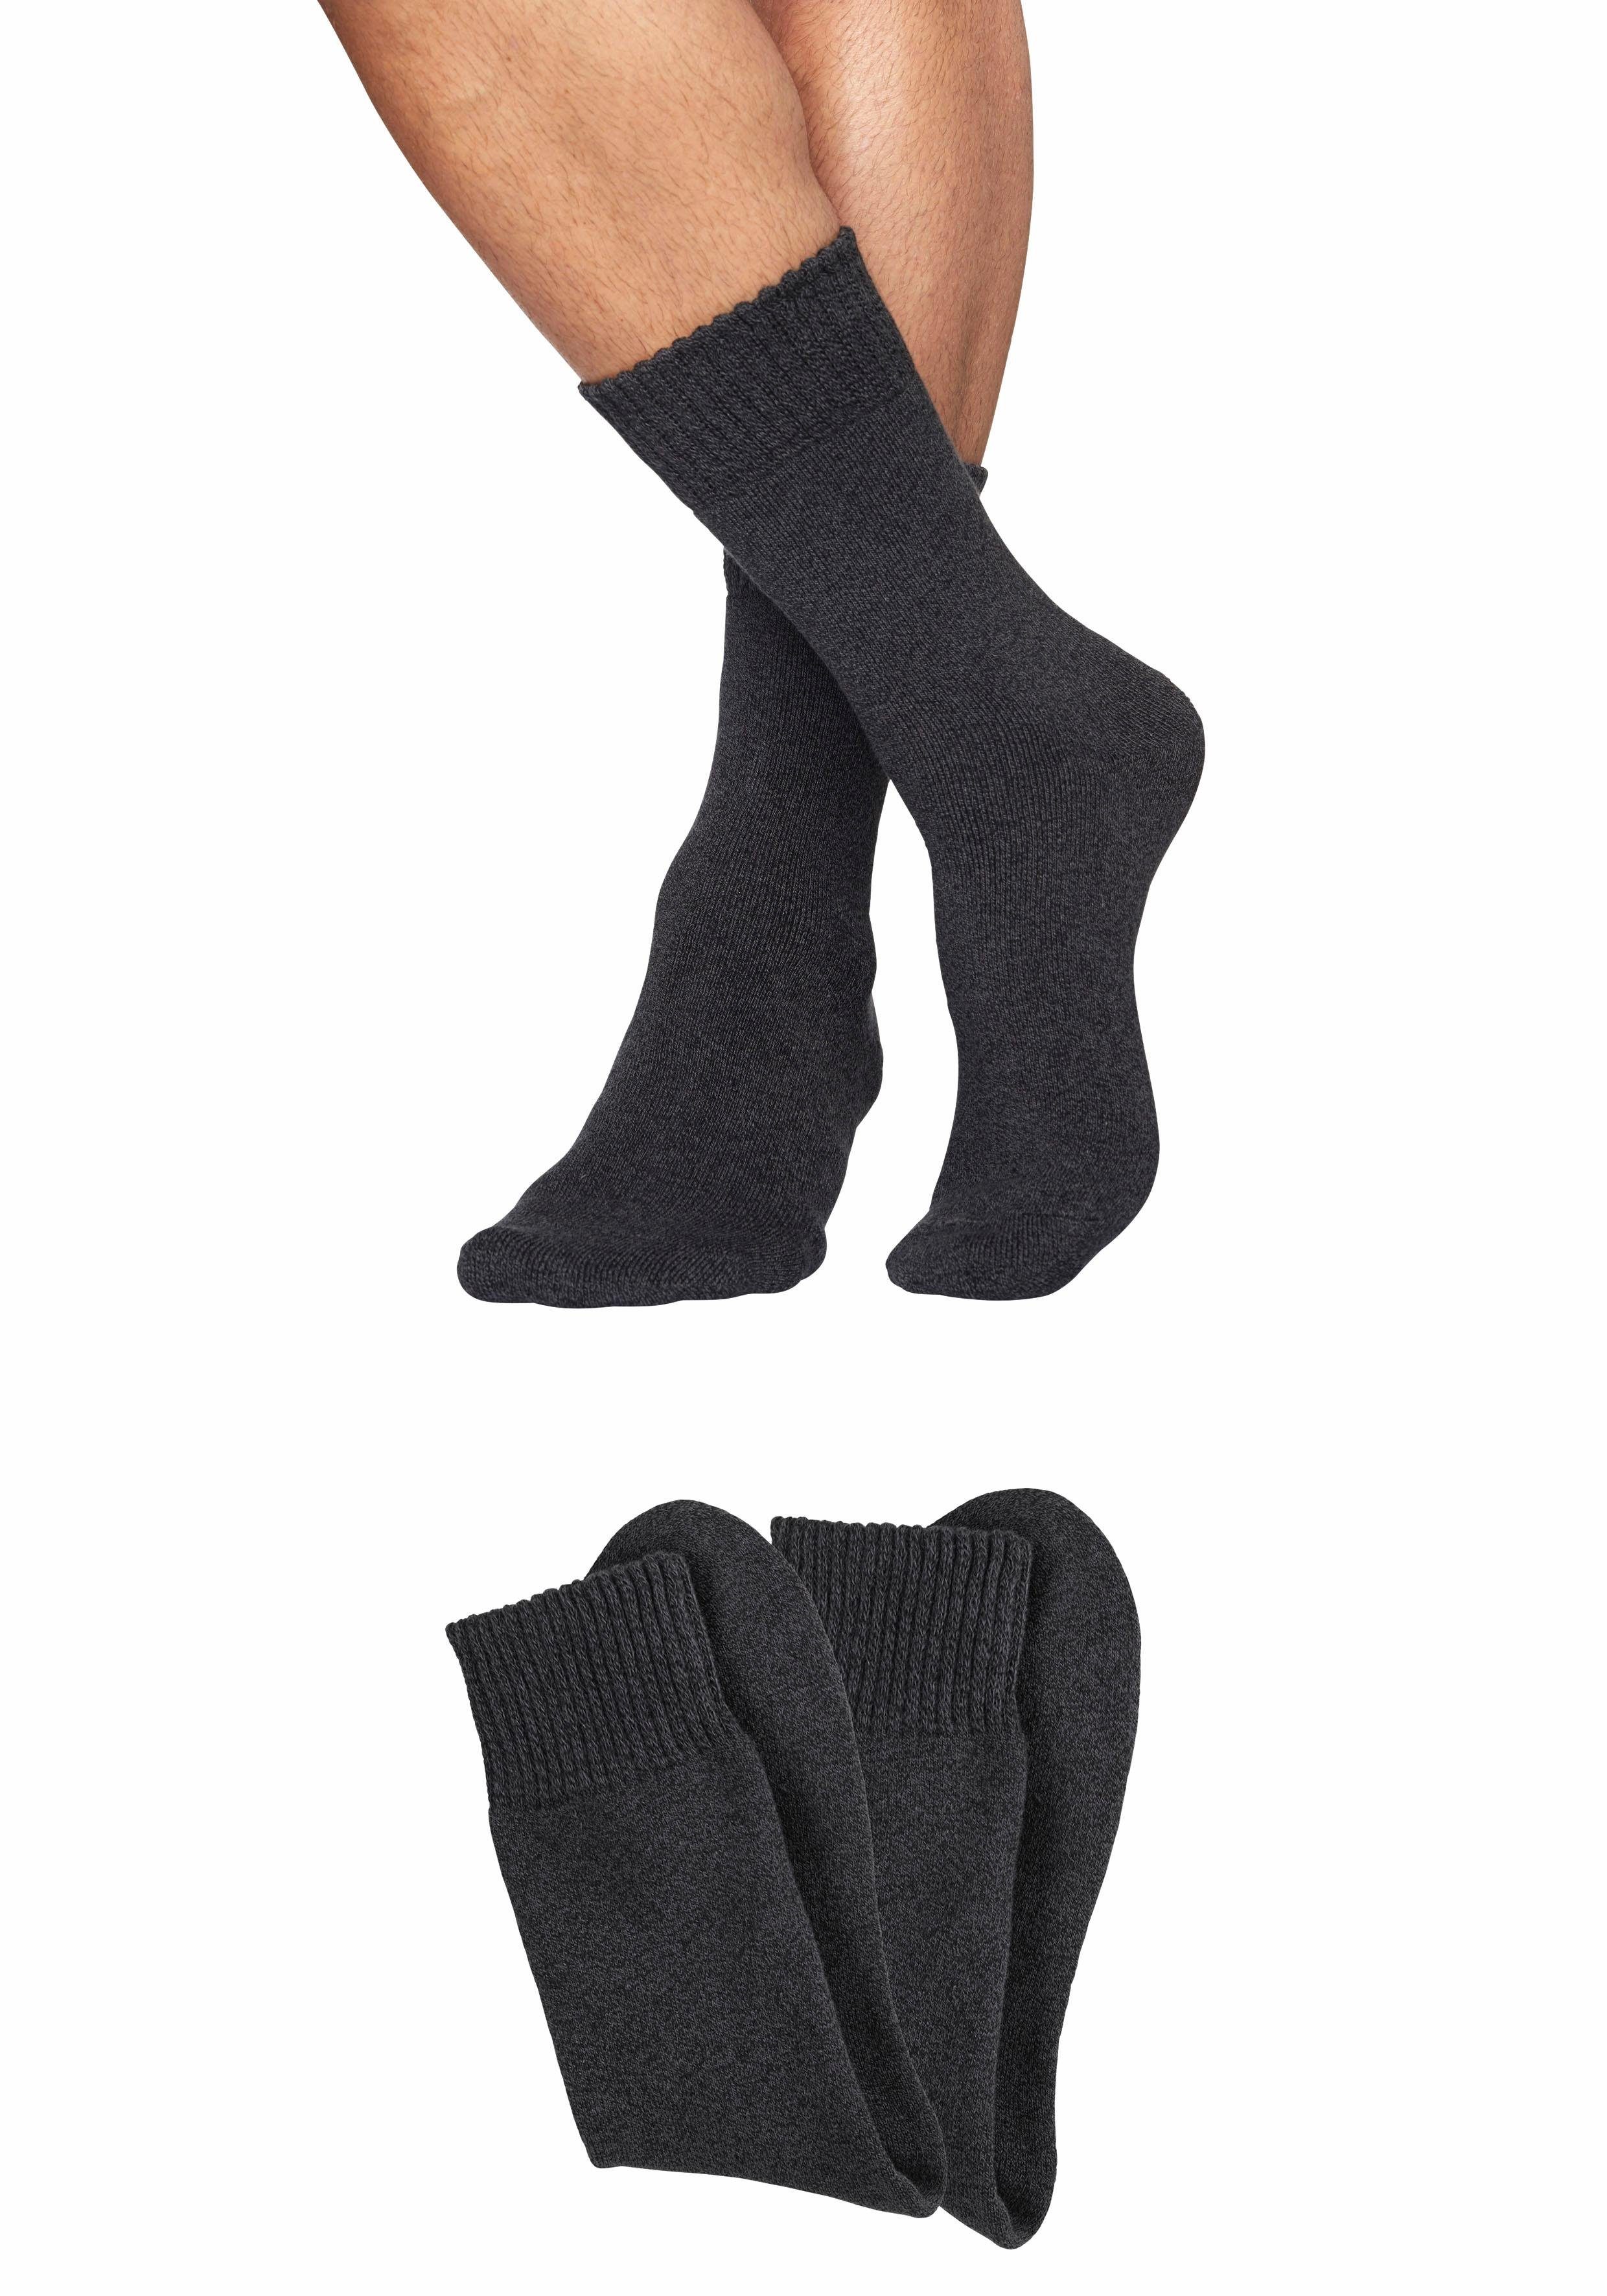 Sympatico NU 15% KORTING: Sympatico volpluchen sokken (2 paar) met comfortabele boord